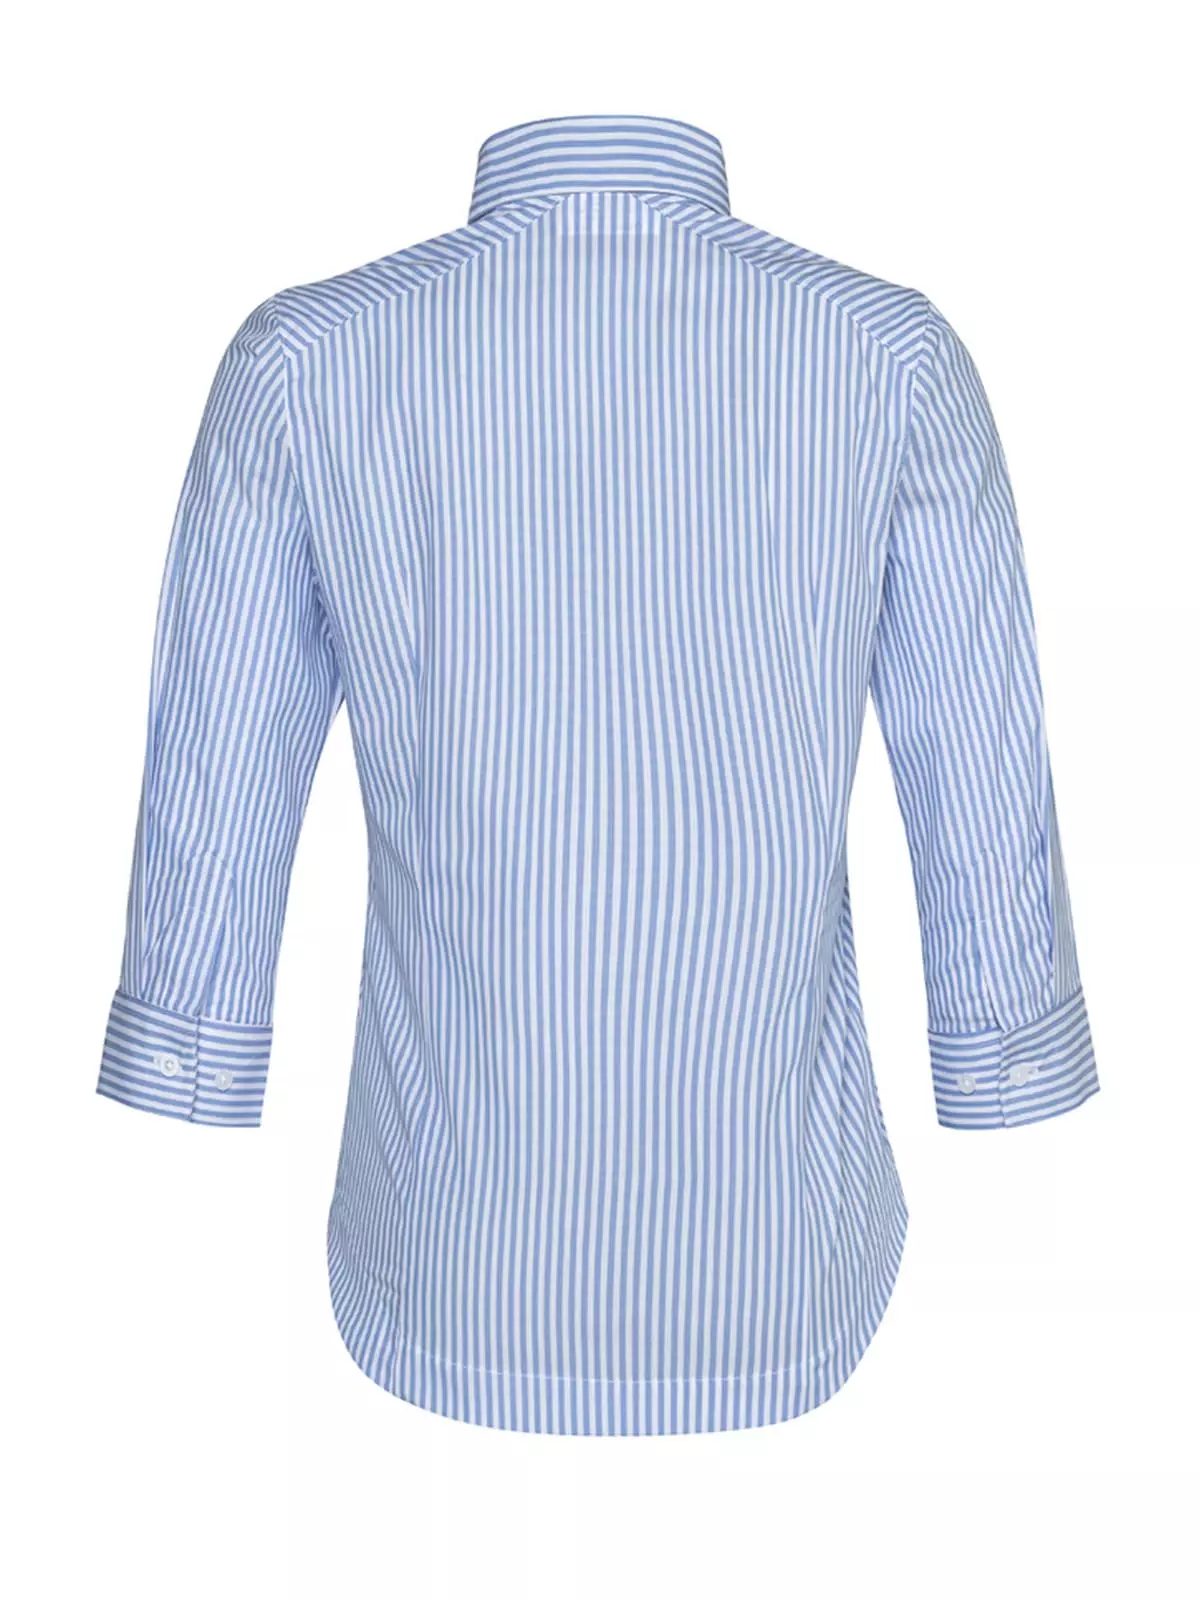 Striped blouse light blue 